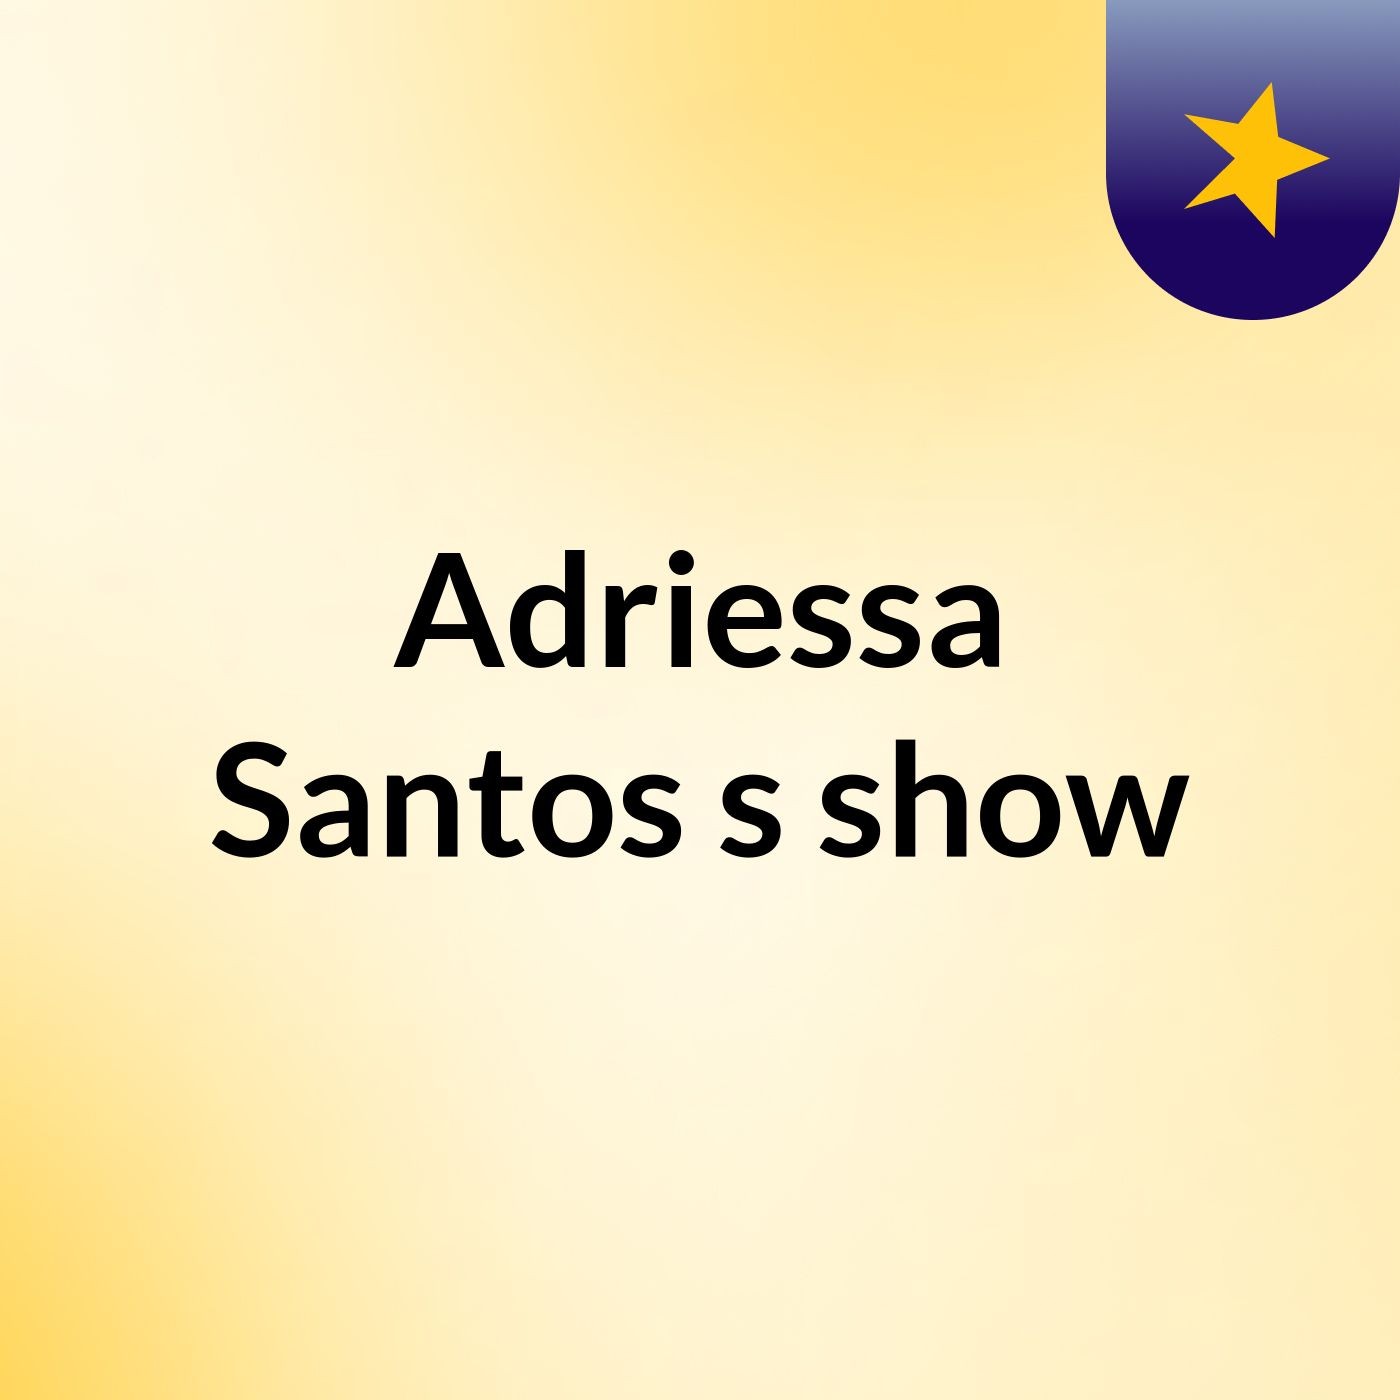 Adriessa Santos's show